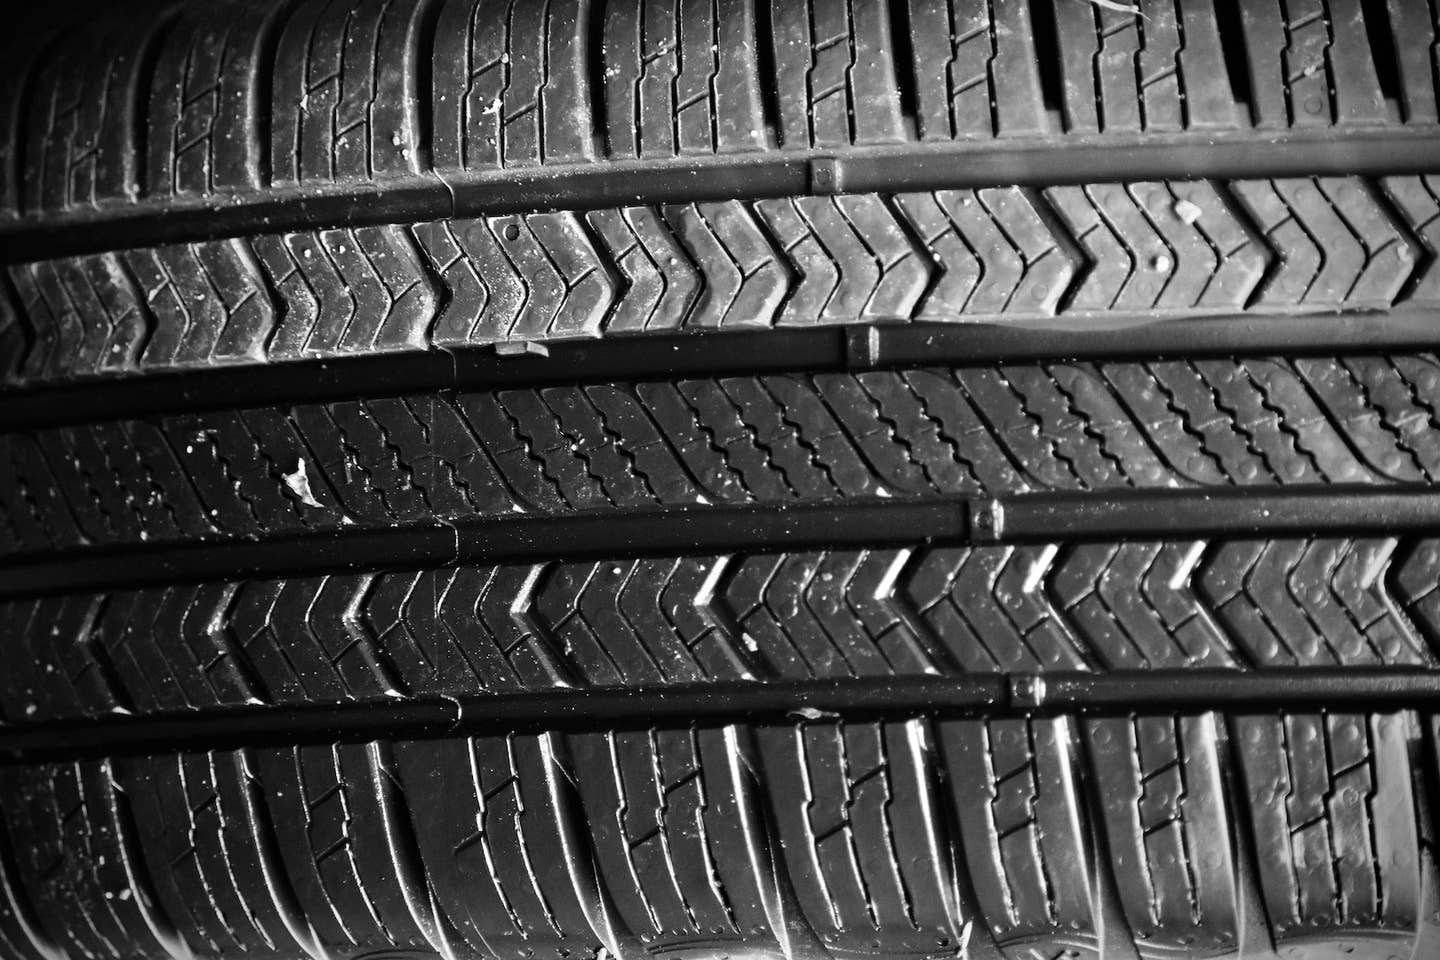 Tread pattern of Vredestein HiTrac All-Season tires